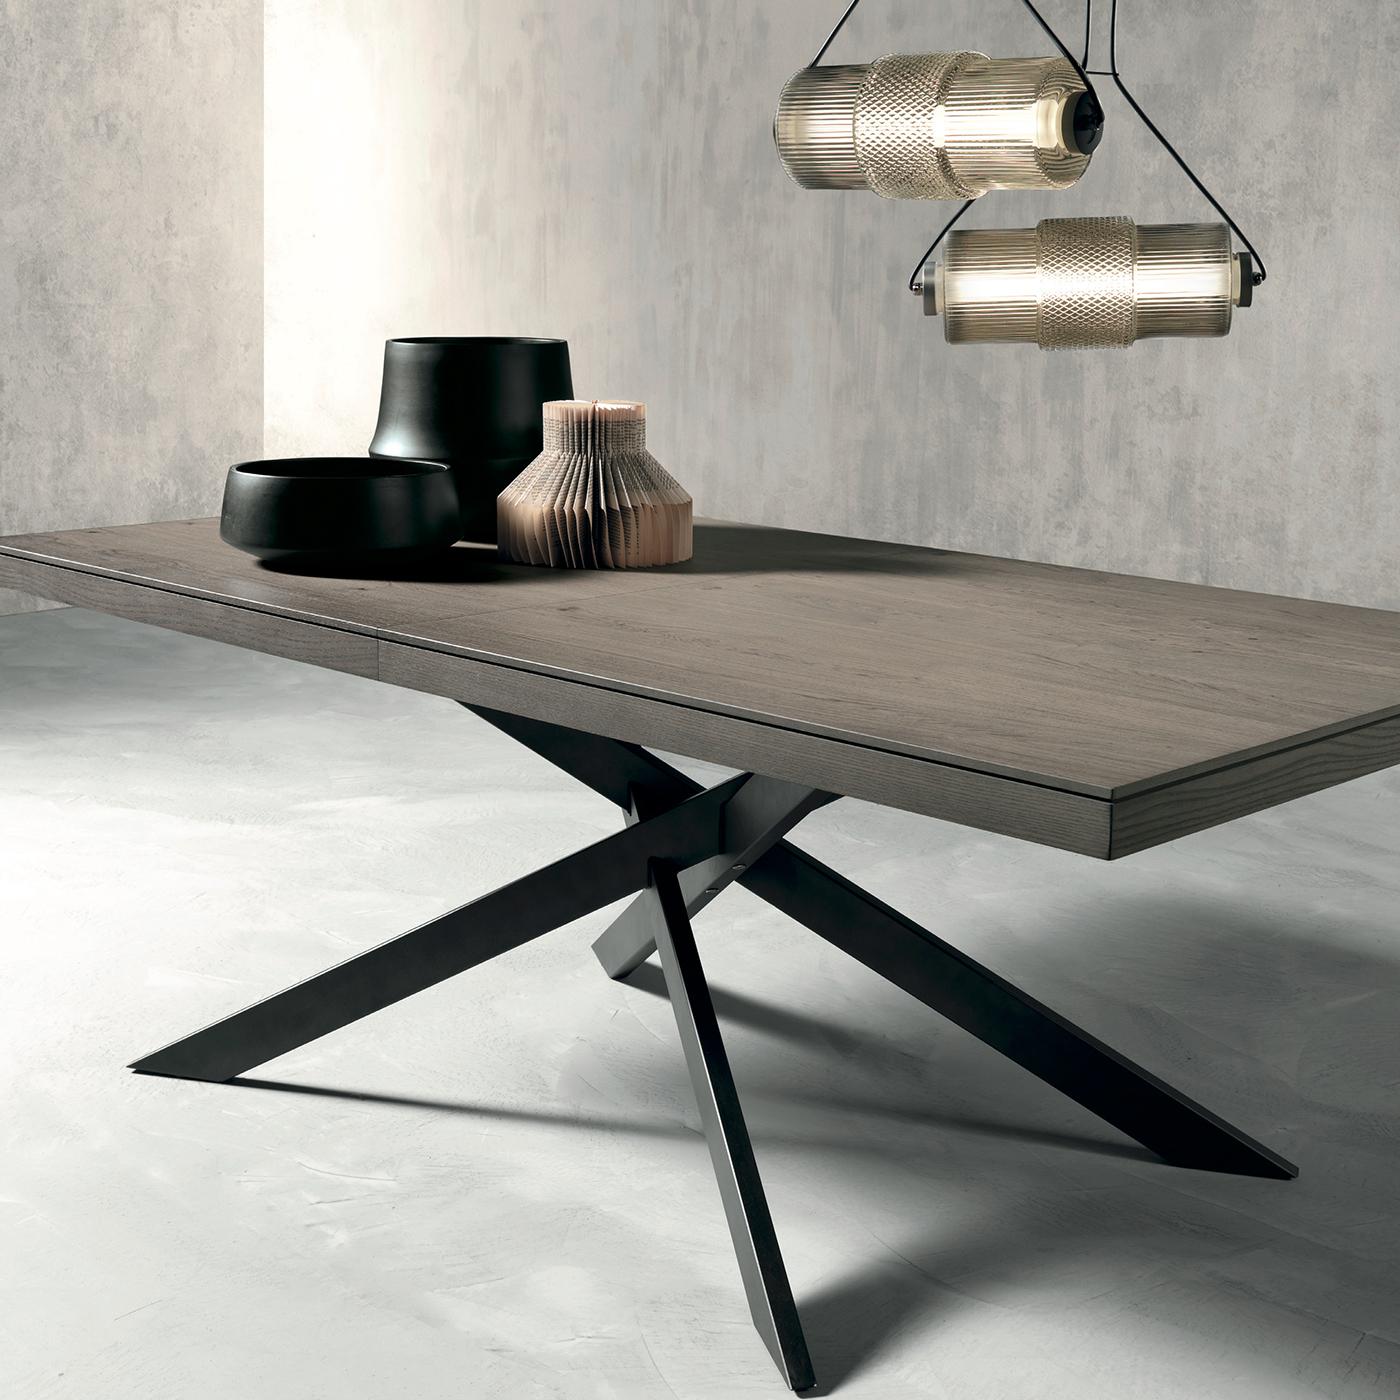 Italian Davis Extendable Table by Benedetti Tavoli d'Arredo